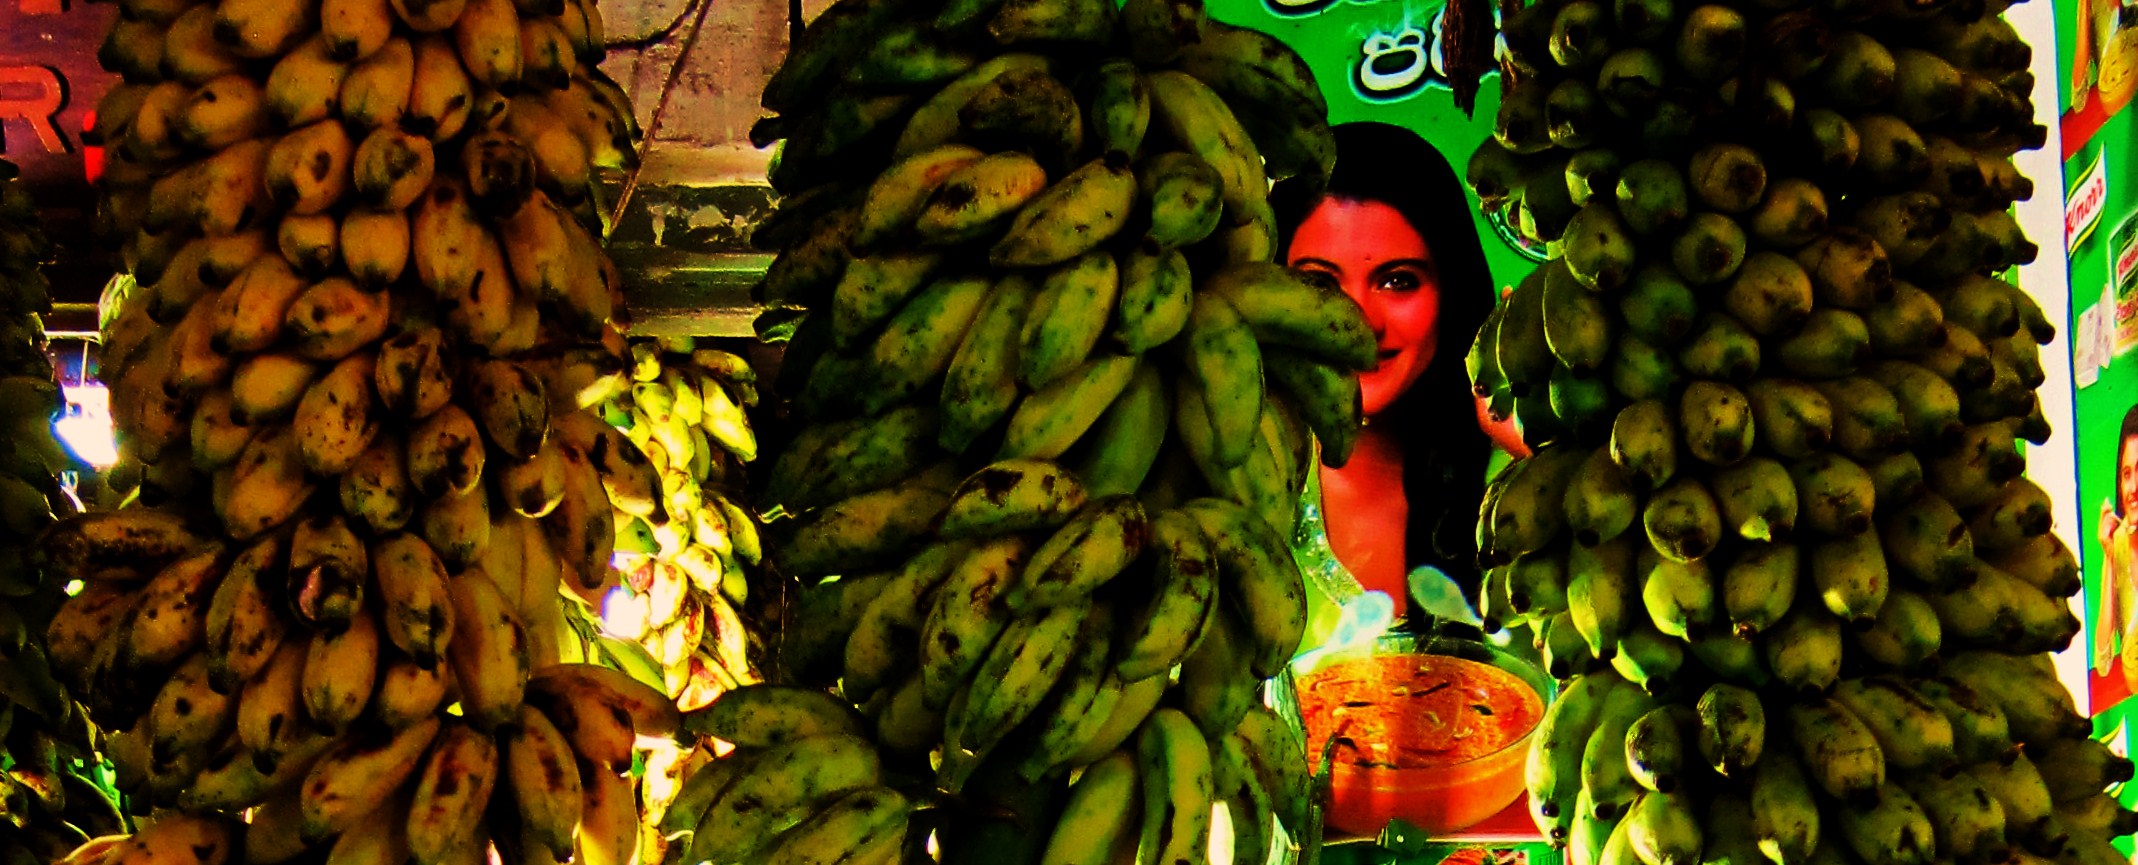 Sri Lanka 2012 - Bananas are fun